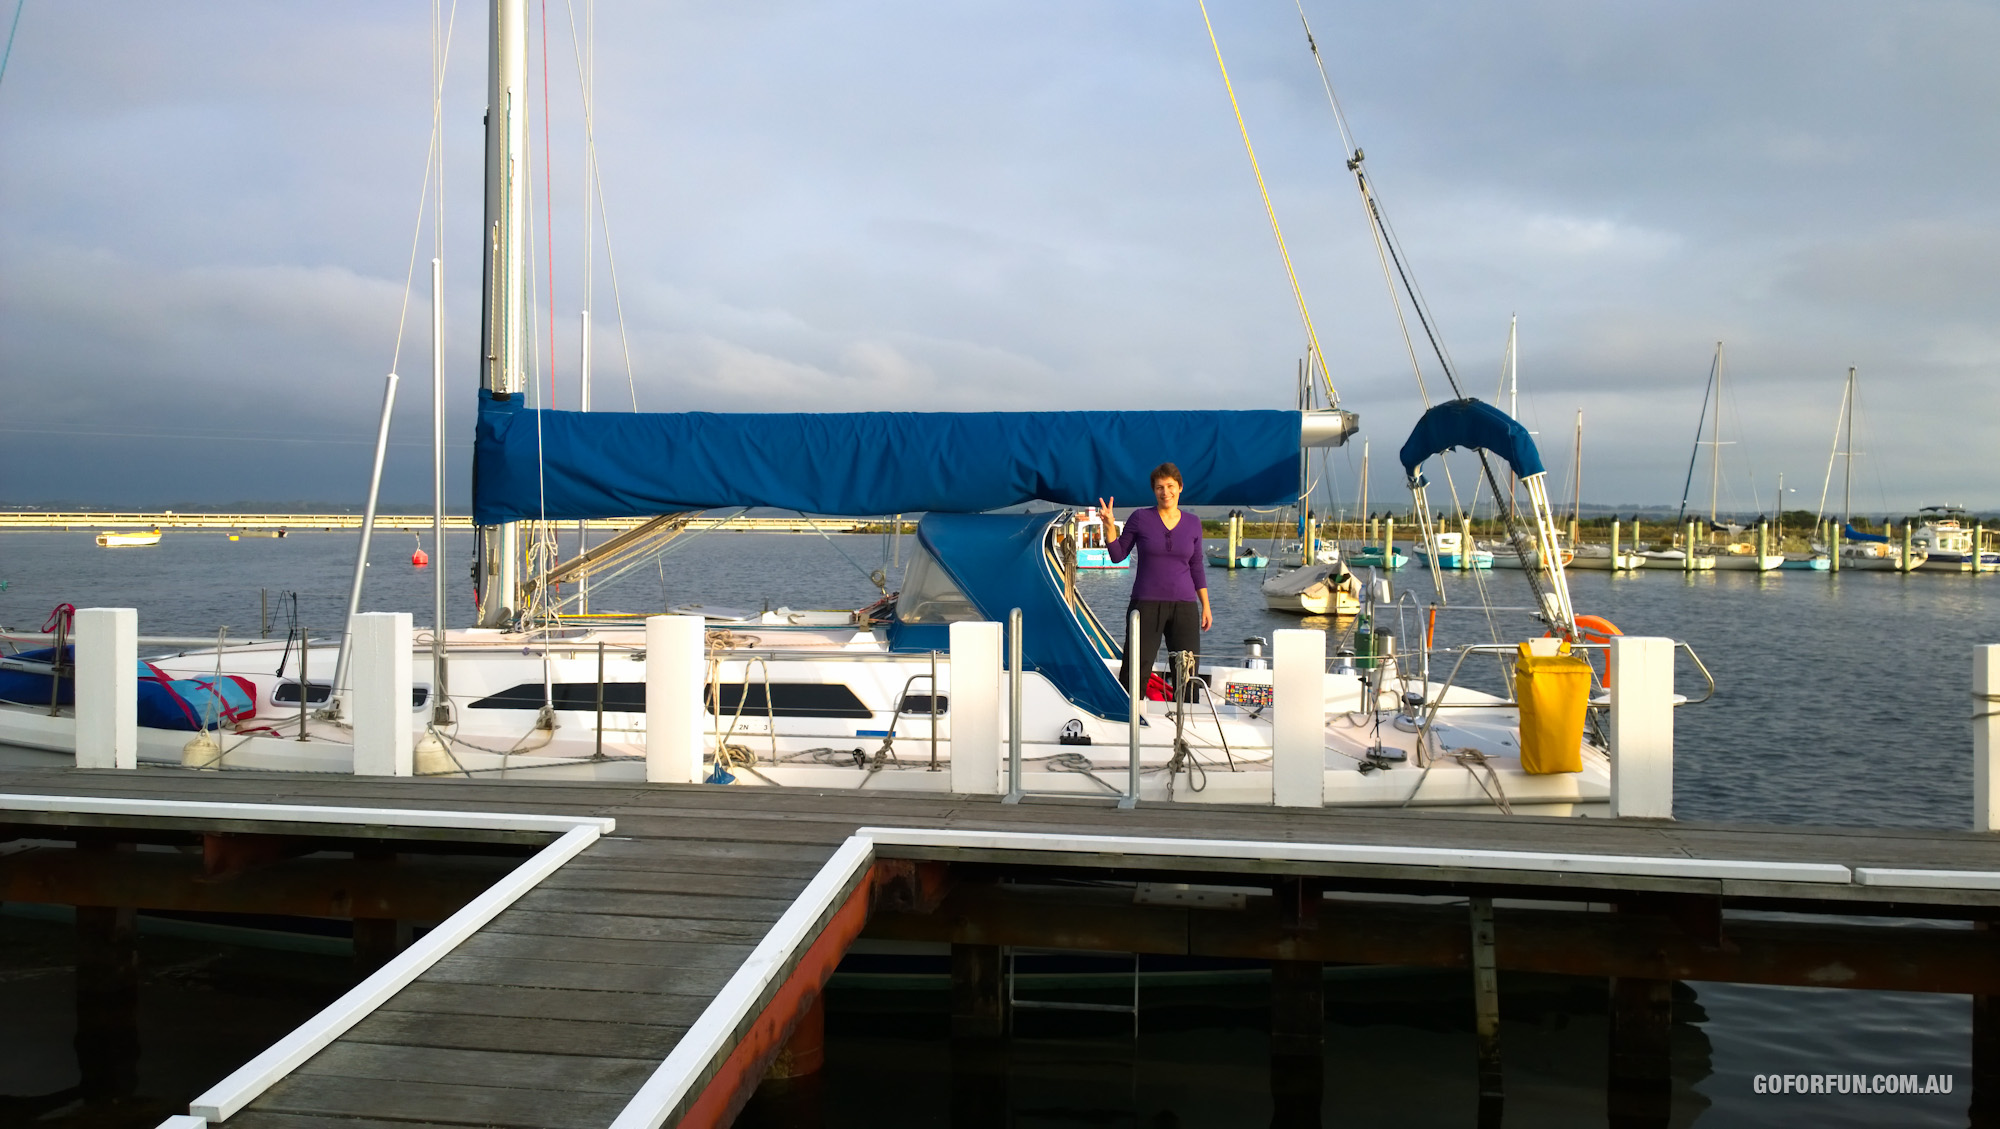 WP_20170423_07_47_41_Pro__highres_royal-geelong-yacht-club-sailing-sailboat-yacht-racing-australia-corio-bay-melbourne-queenscliff-swan-island-victoria